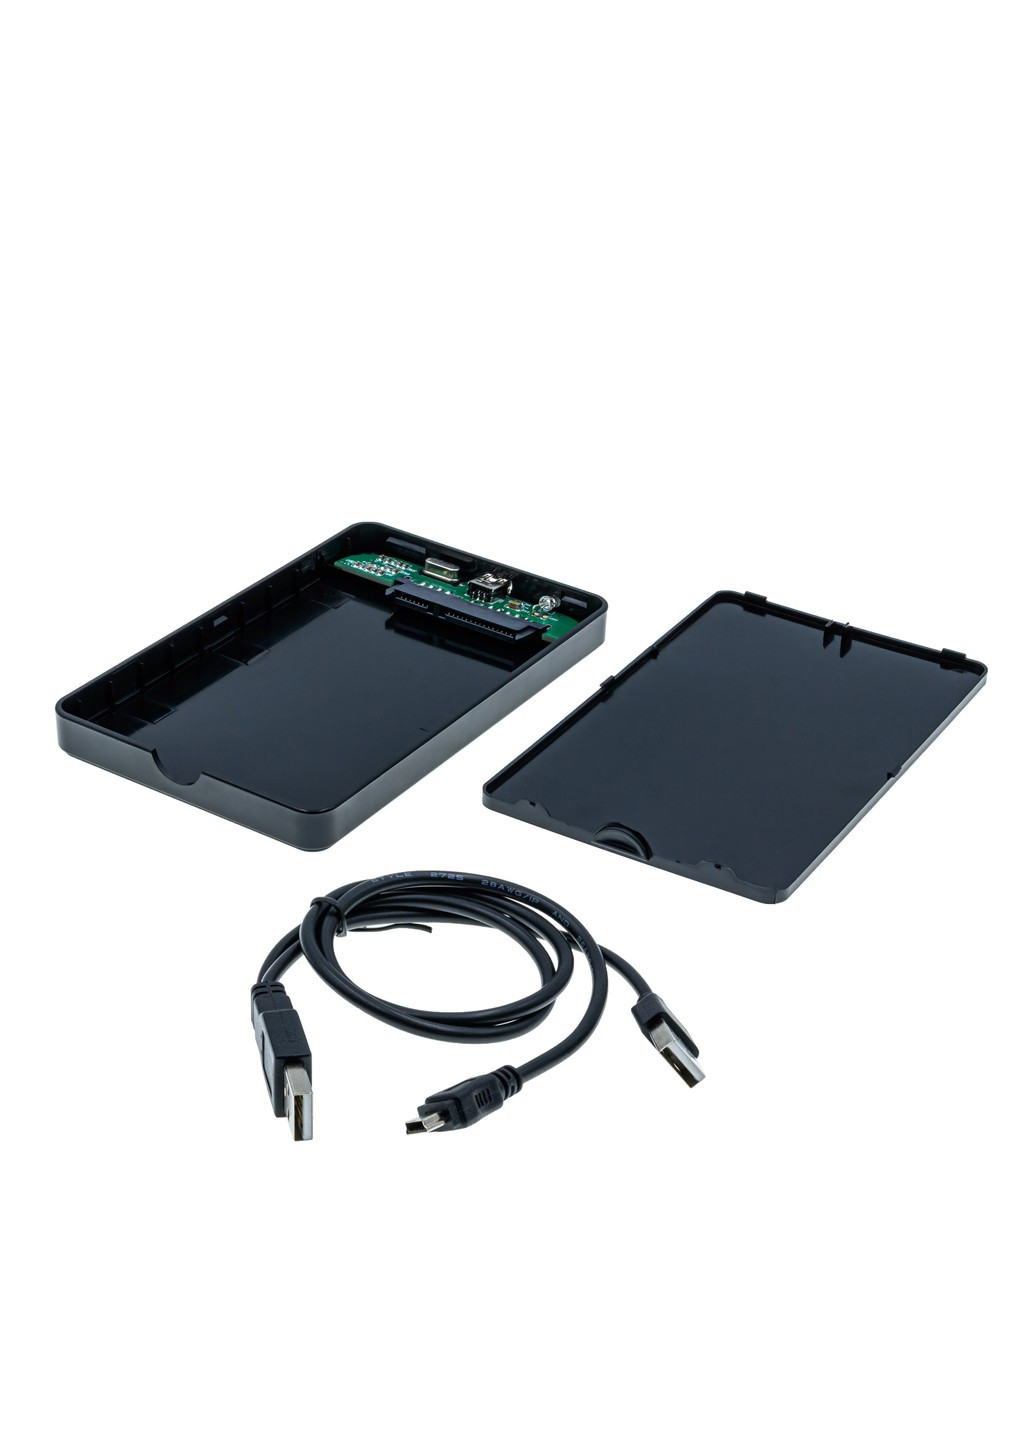 Зовнішня кишеня для HDD 2,5" USB 2,0 (HDE22) Grand-X (253839081)